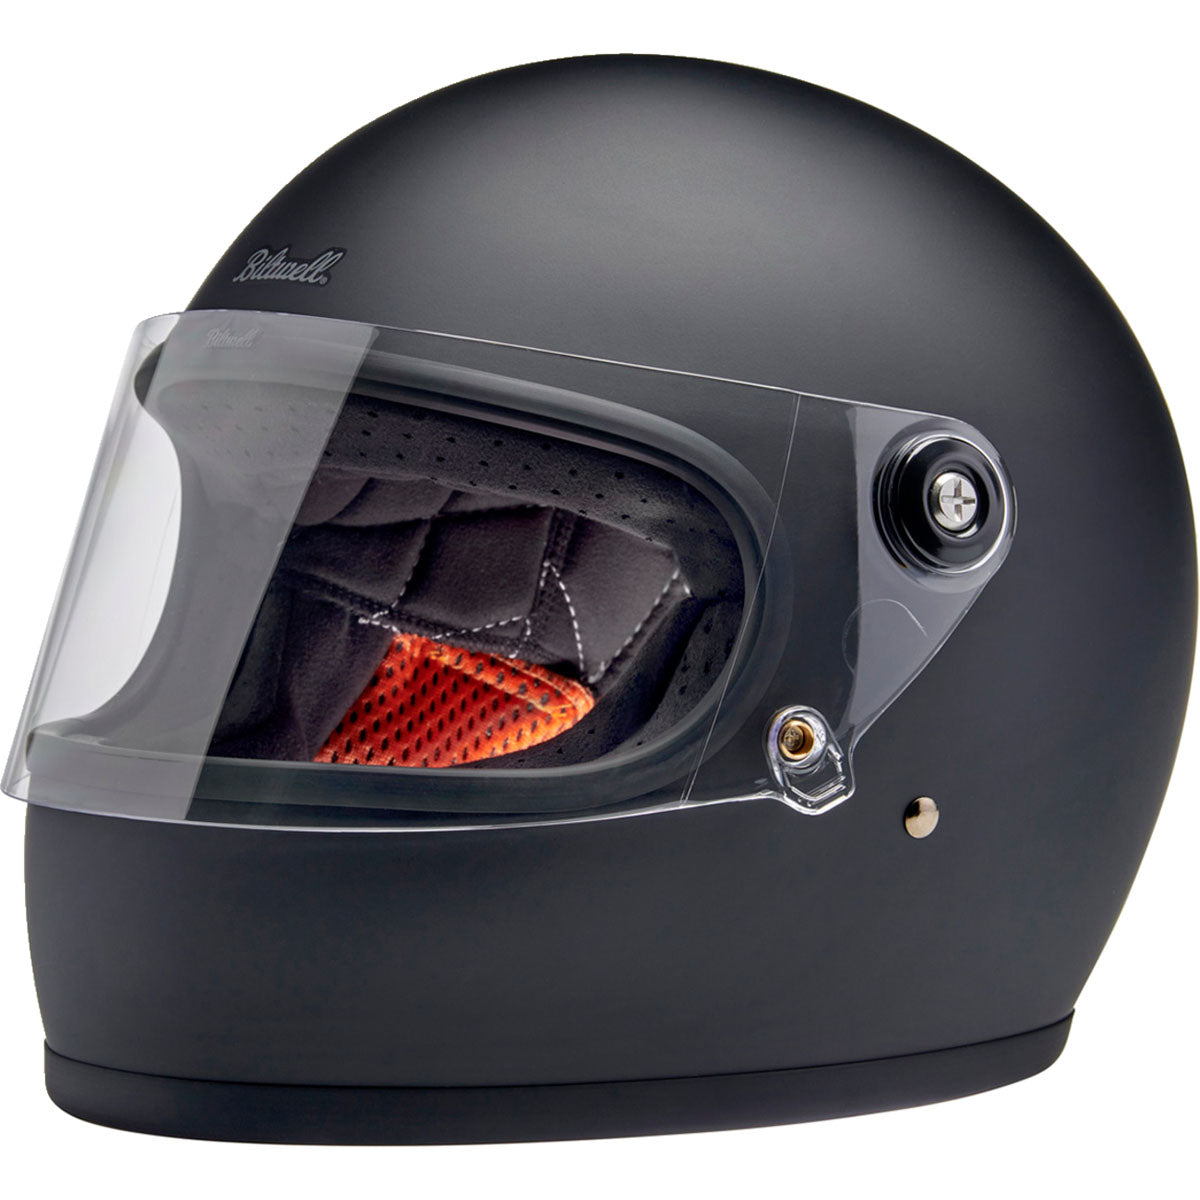 Biltwell Gringo S Helmet - Flat Black